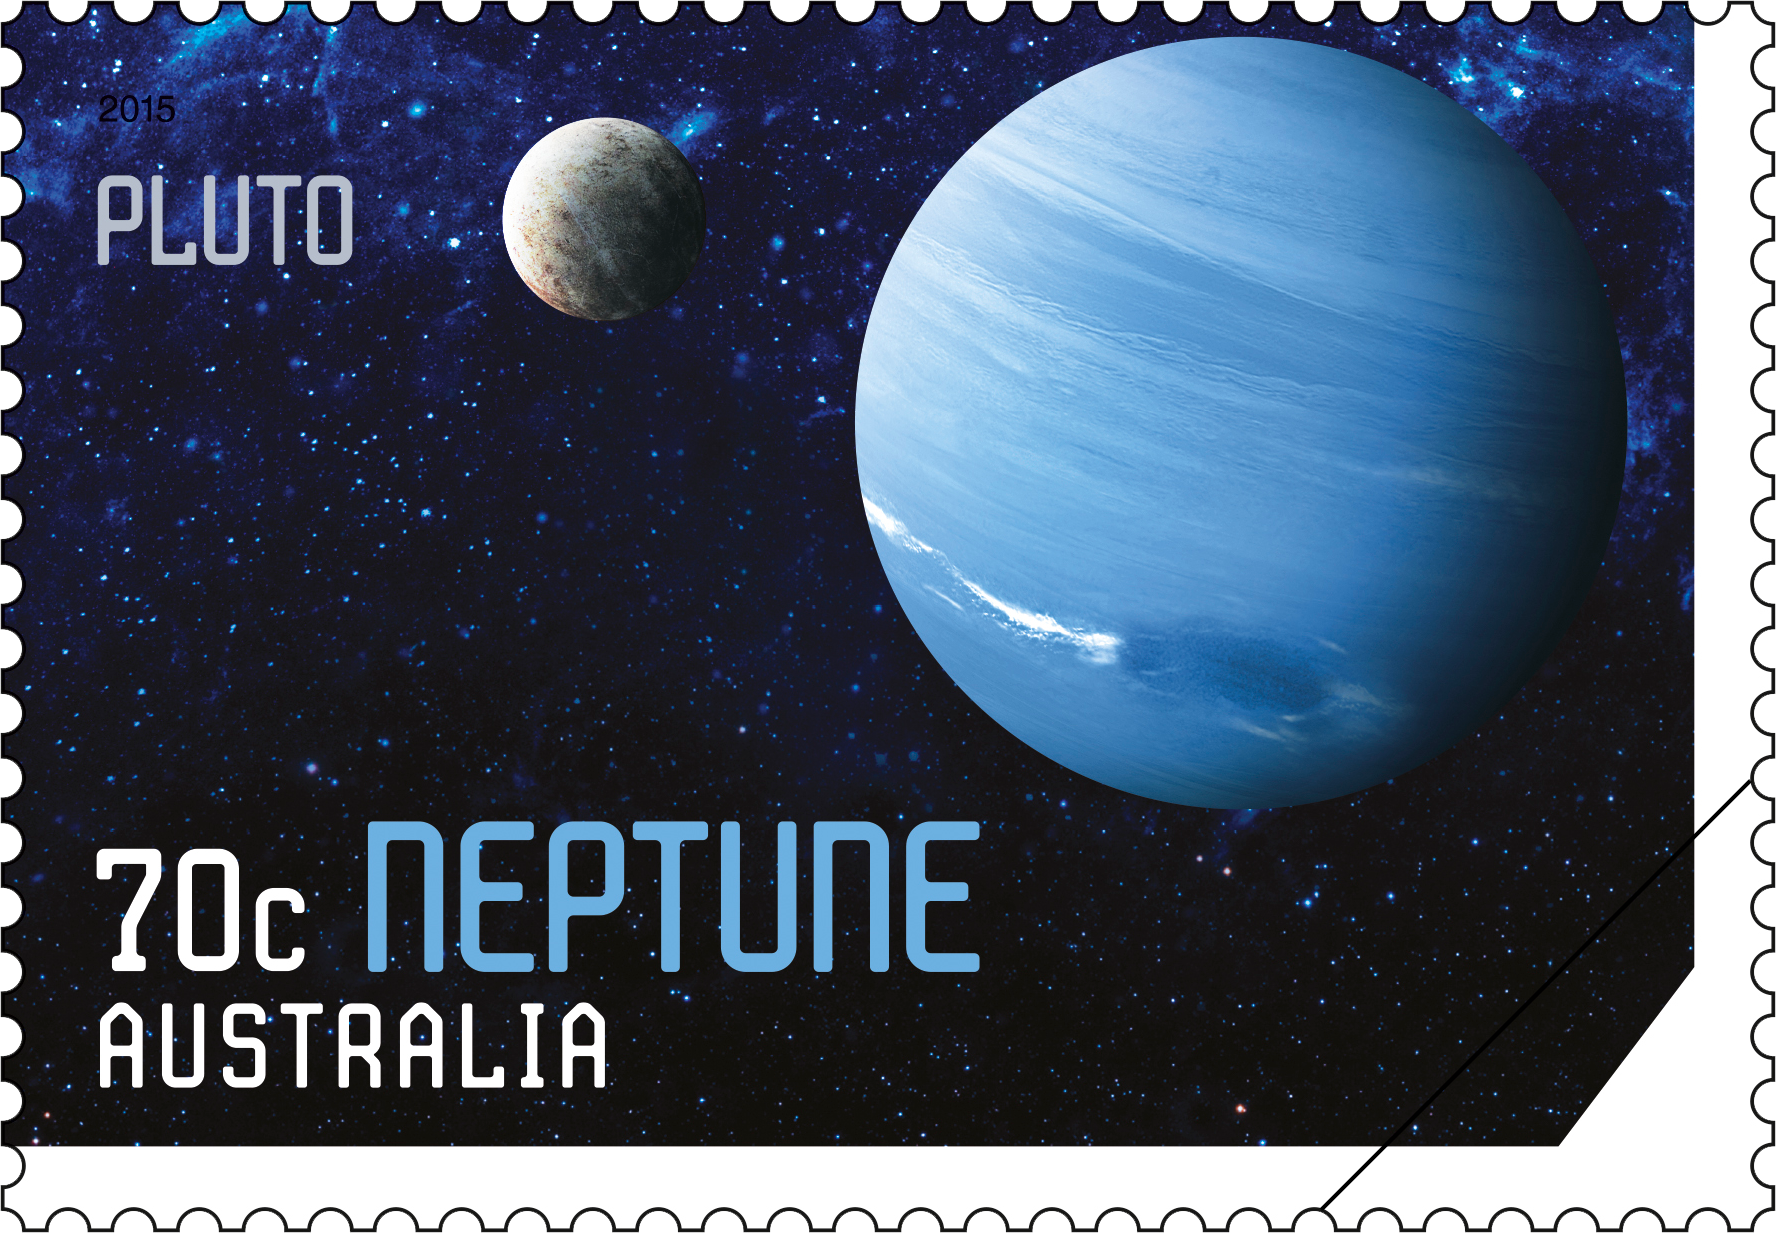 solar system stamp